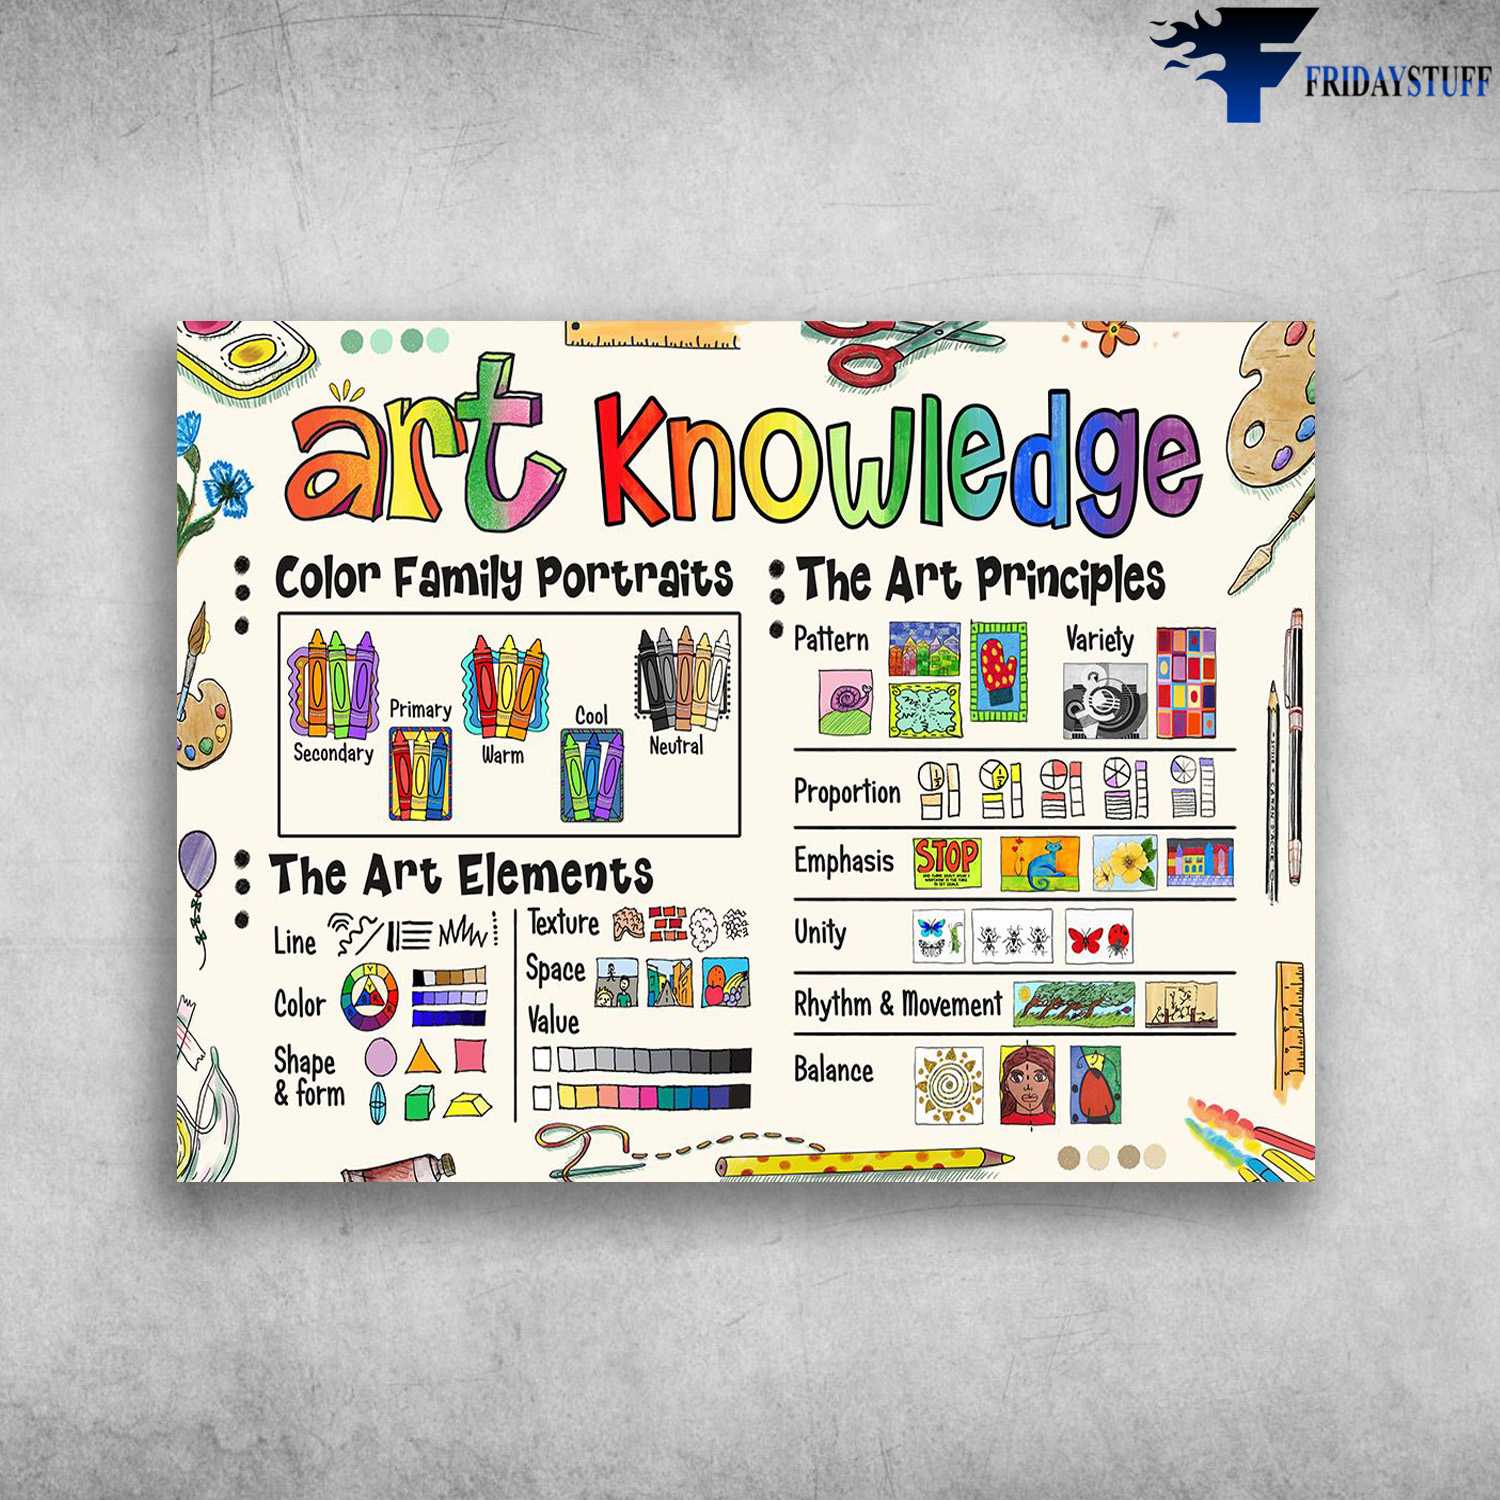 Art Knowledge, Color Family Portraits, The Art Principles, The Art Elements